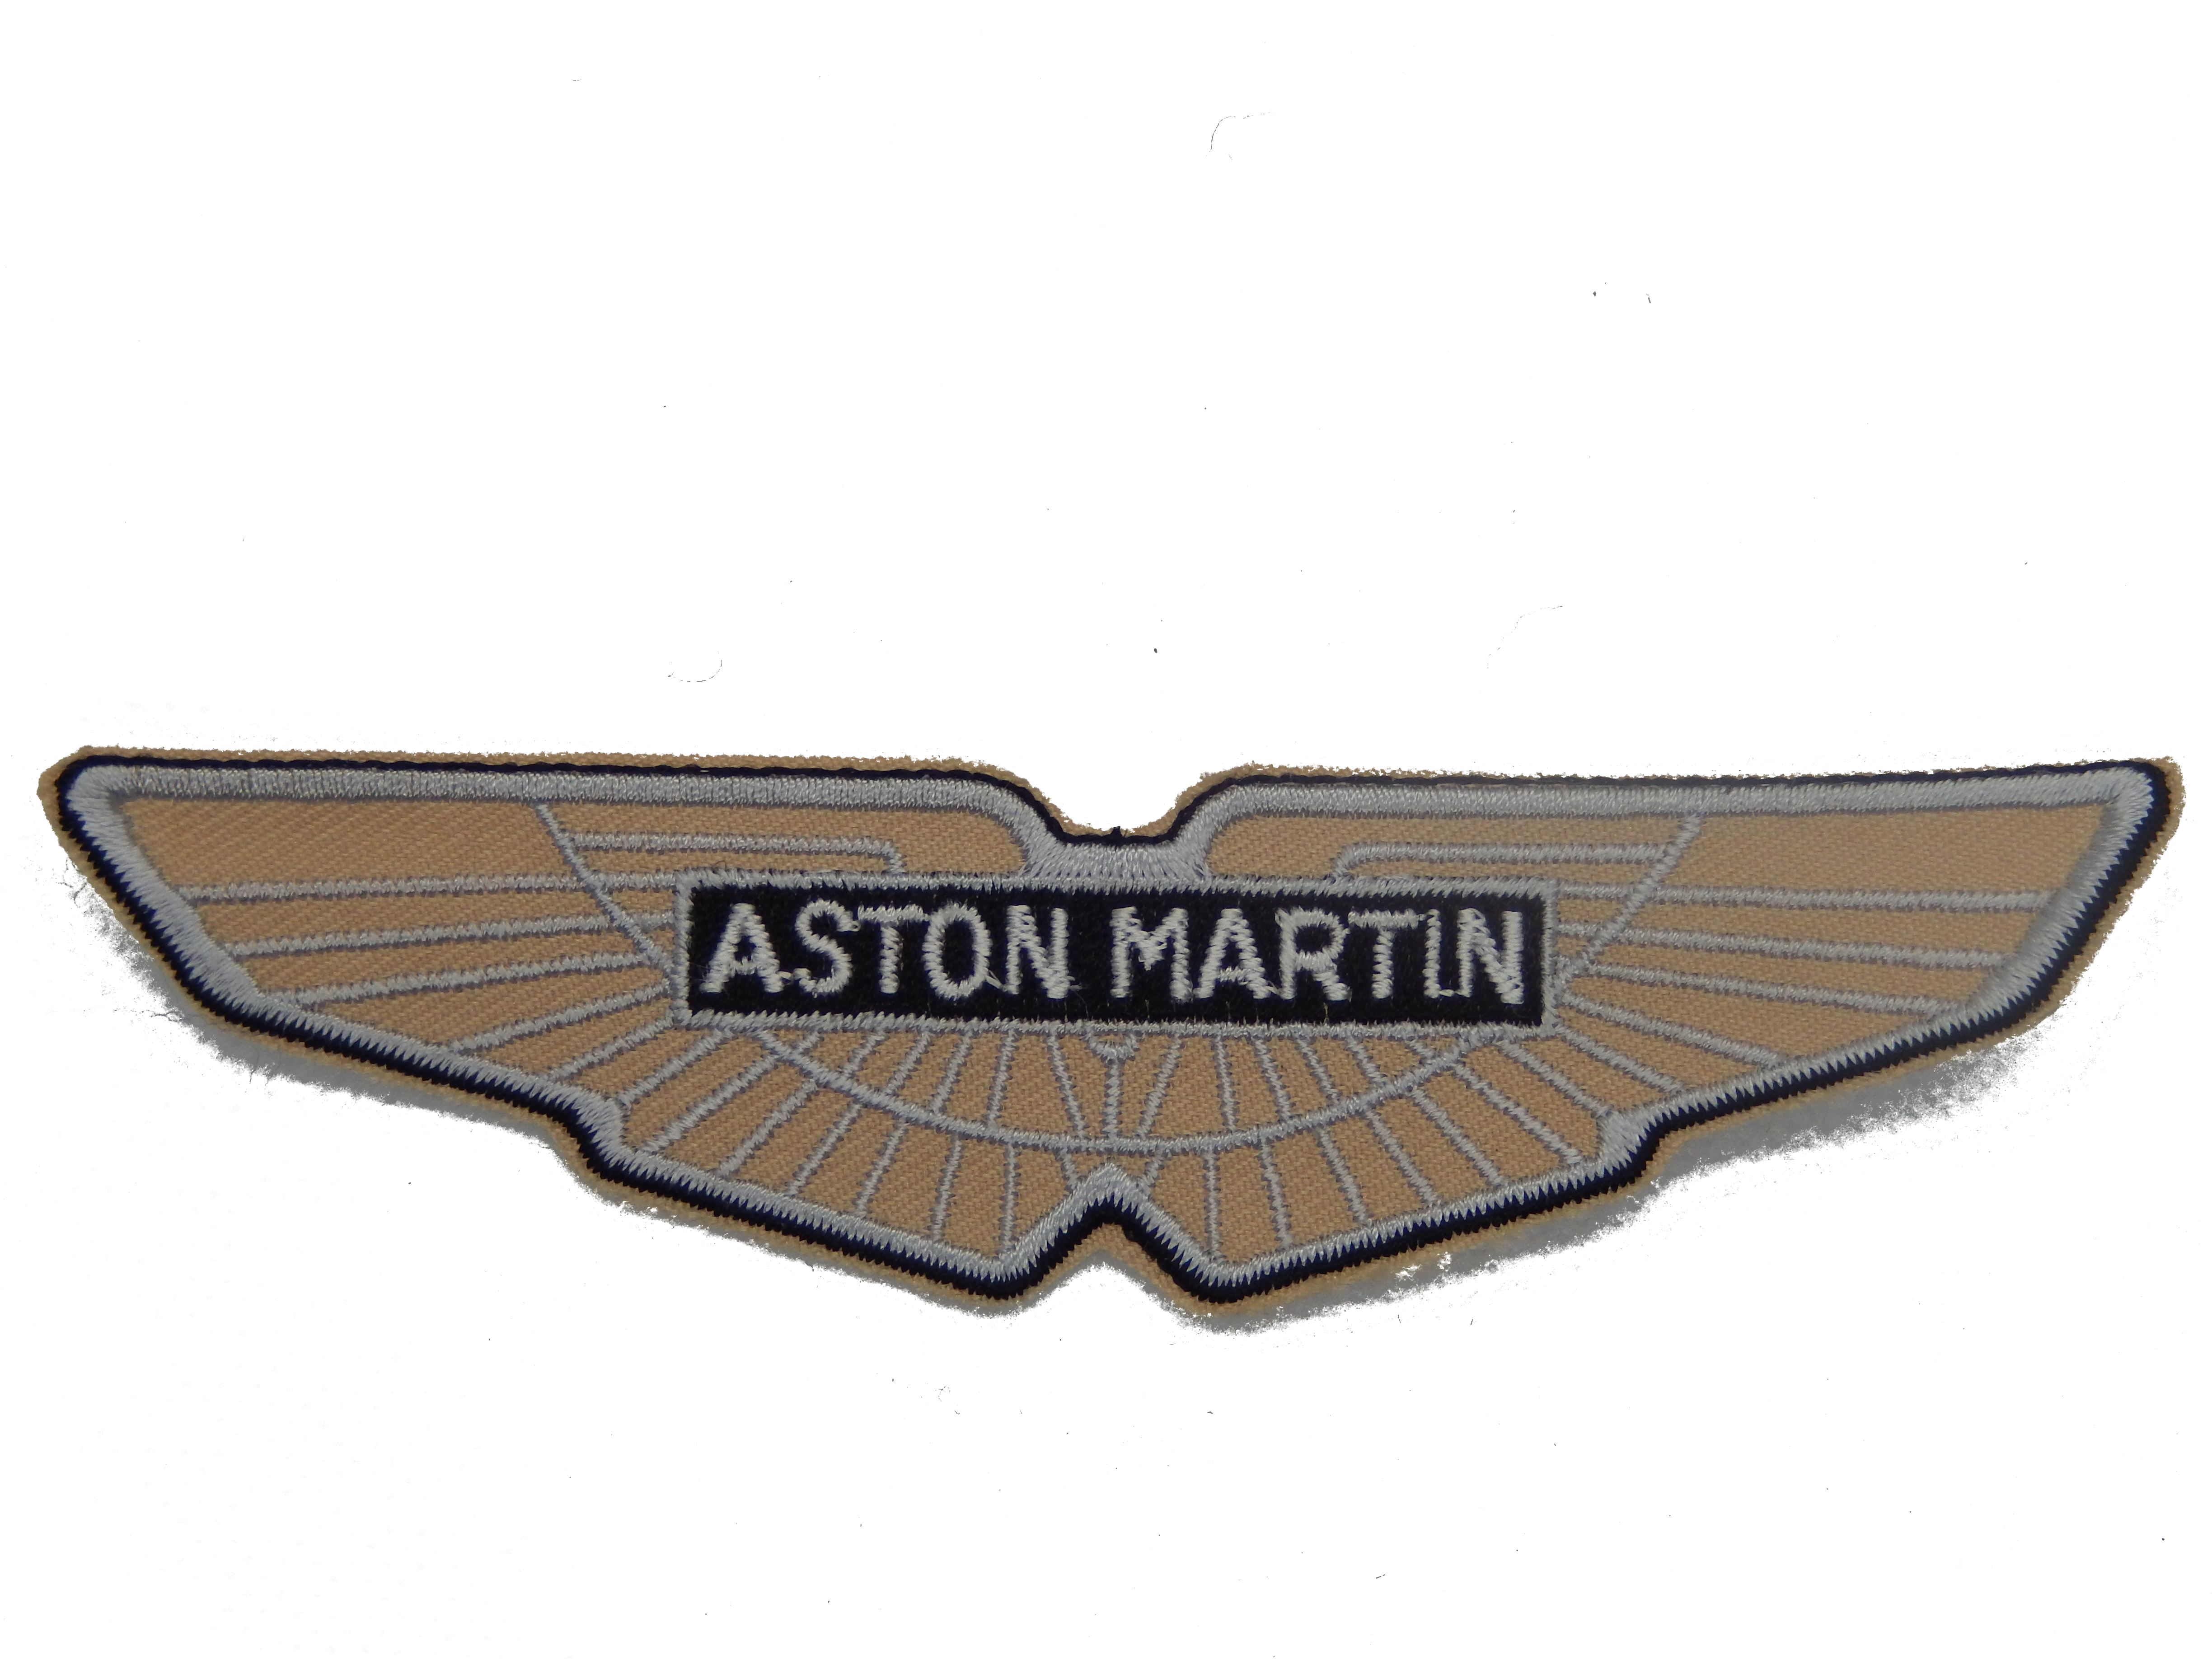 Aston Martin embroidered cloth badge